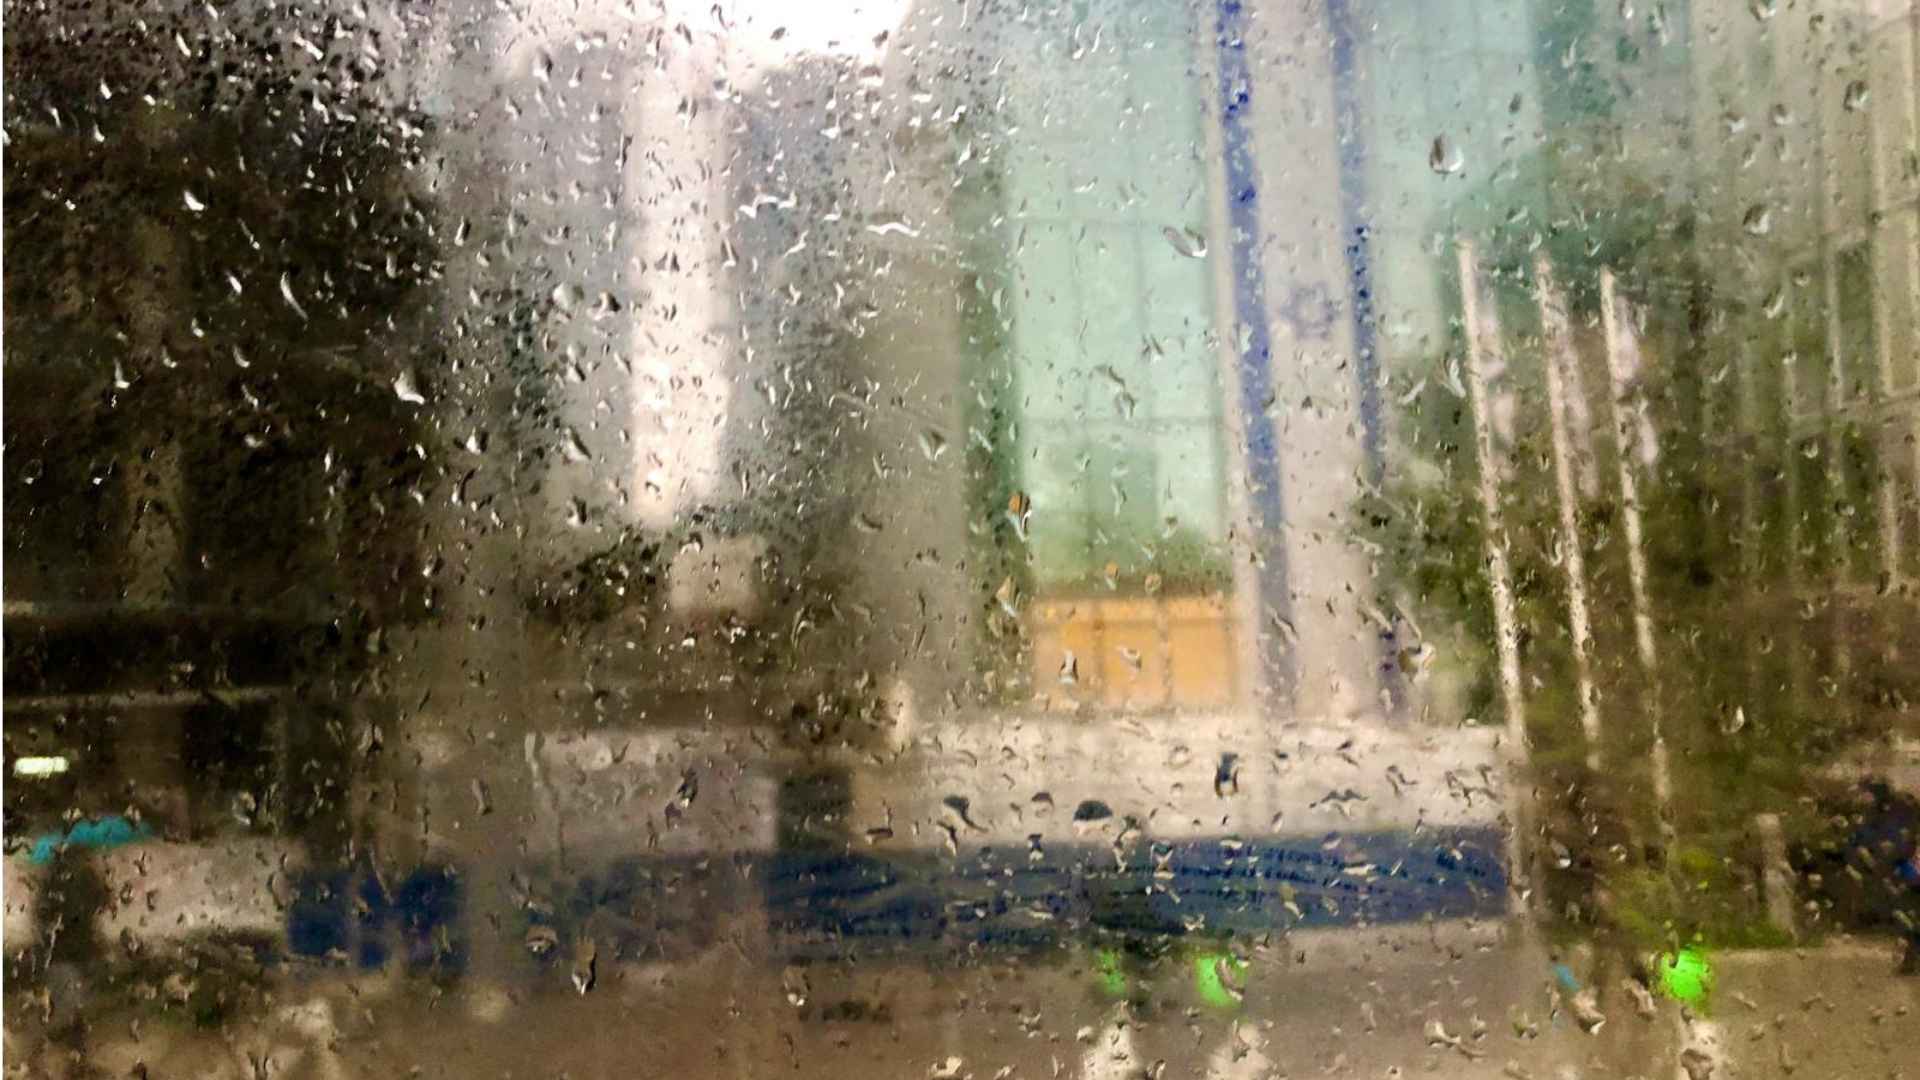 An Israeli flag on a building seen through a rain-covered window